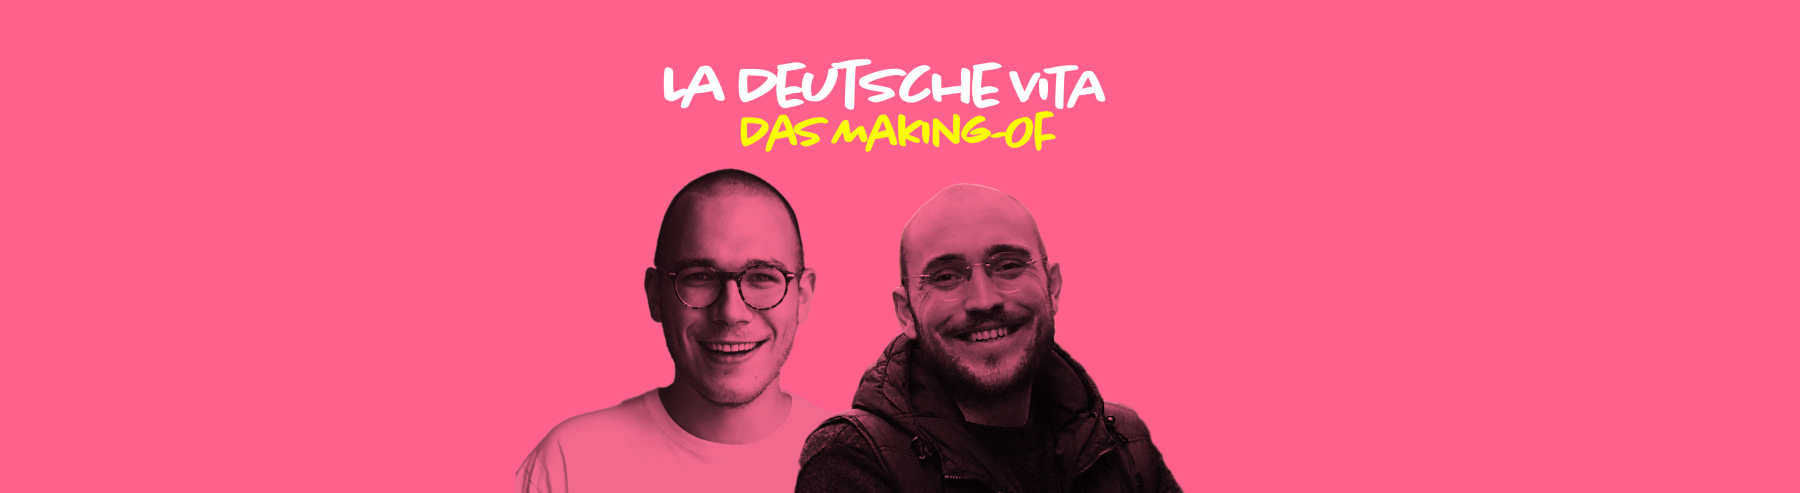 Image of the hosts of the podcast - La Deutsche vita